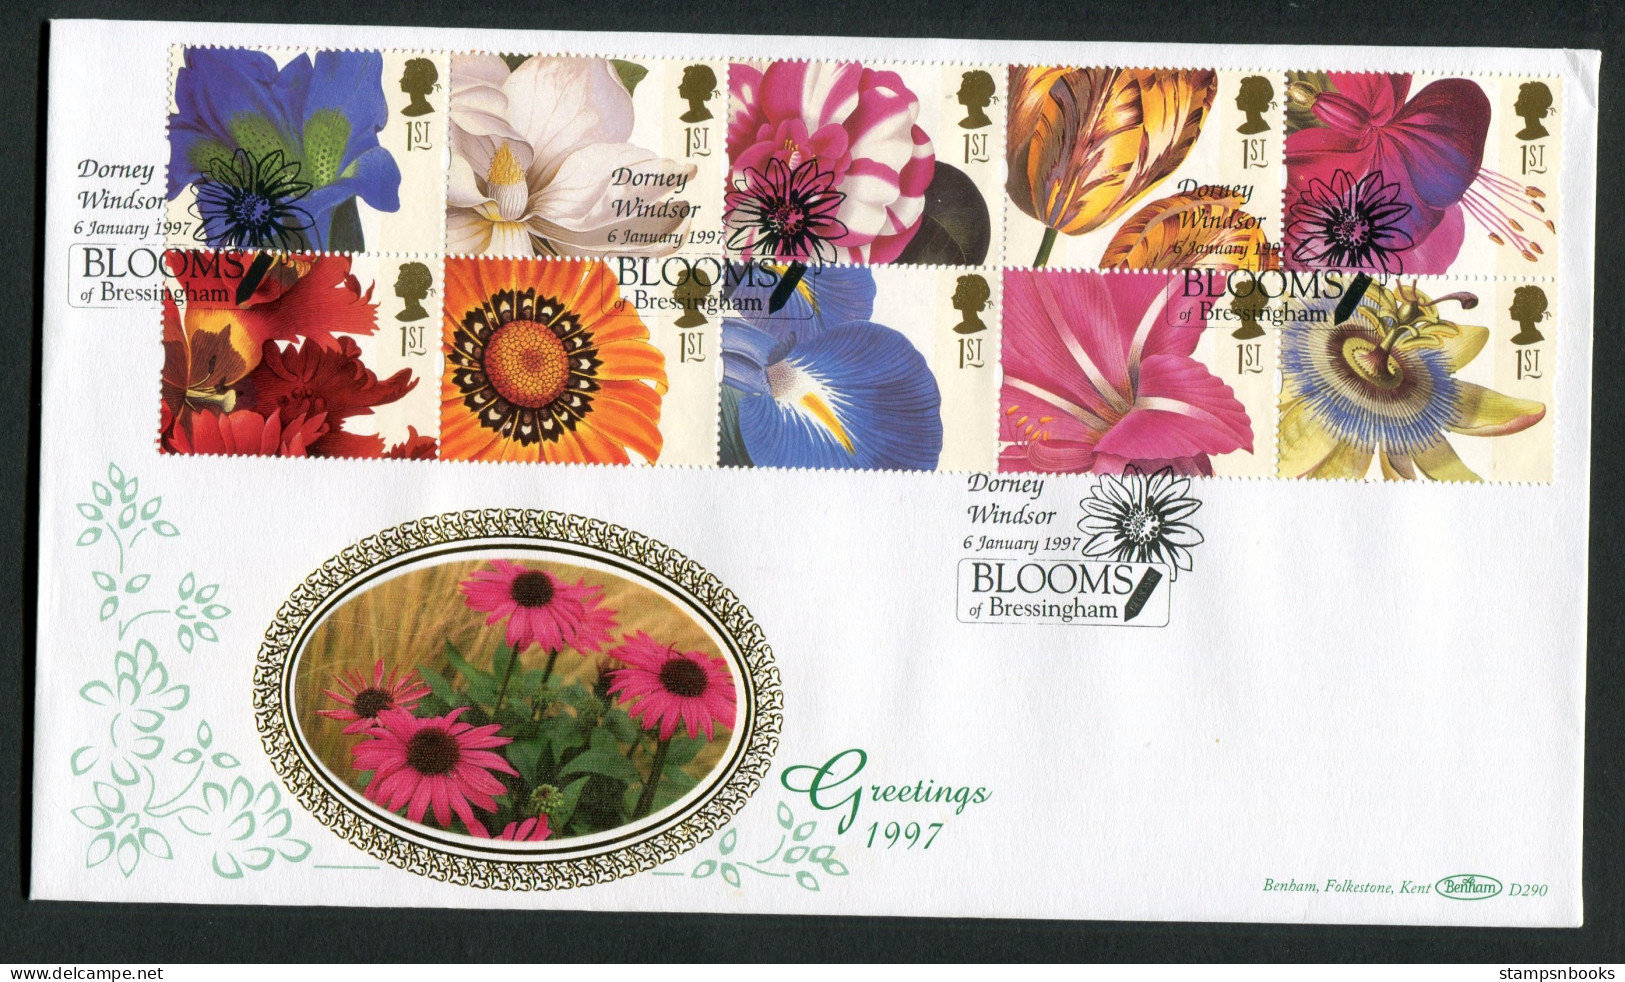 1997 GB Flowers Greeting Stamps First Day Cover, Dorney Windsor Blooms Of Bressingham Benham D290 FDC - 1991-00 Ediciones Decimales